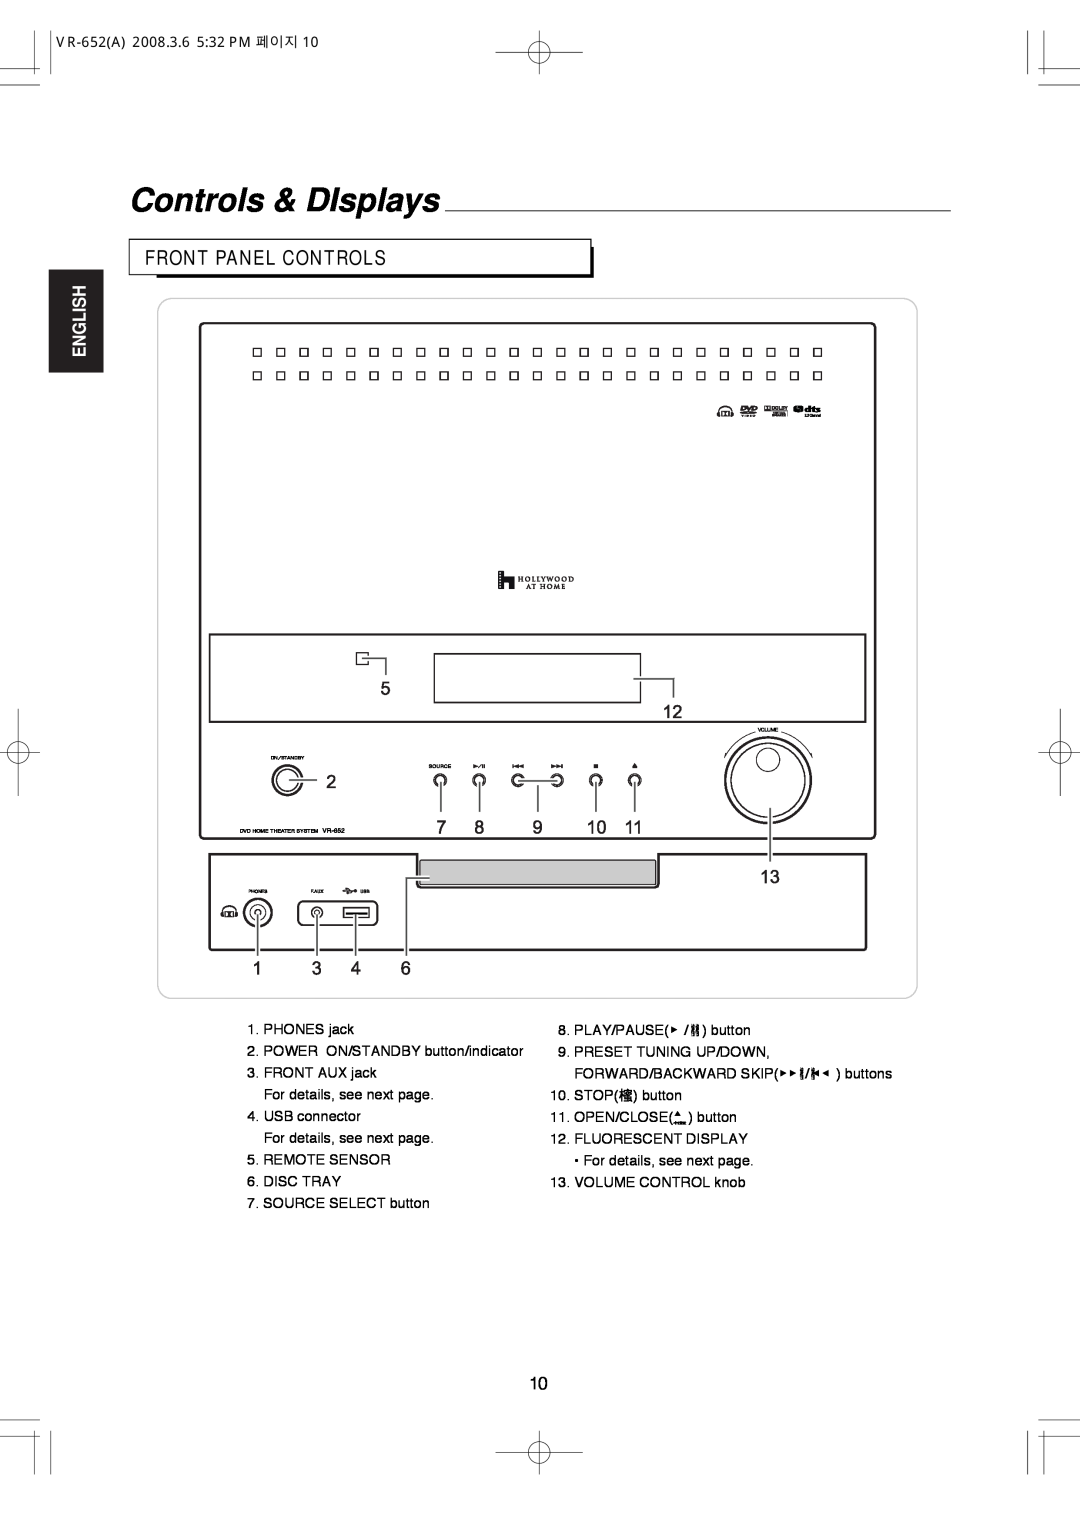 Hollywood VR-652 manual Controls & DIsplays, Front Panel Controls, English 